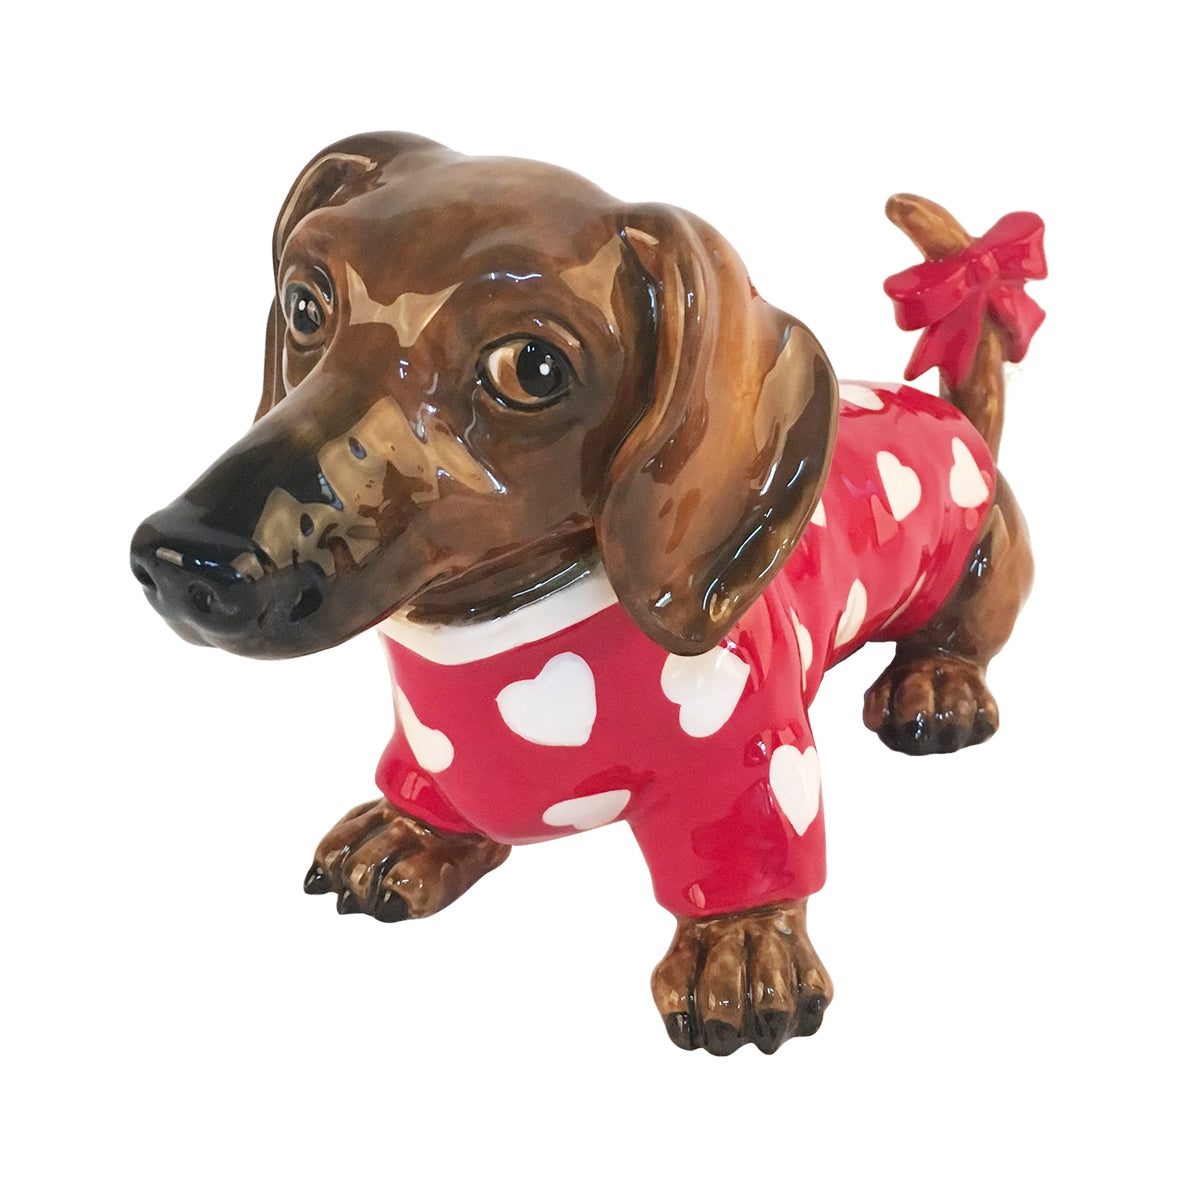 Handmade Heart Dog Dachshund Figurine